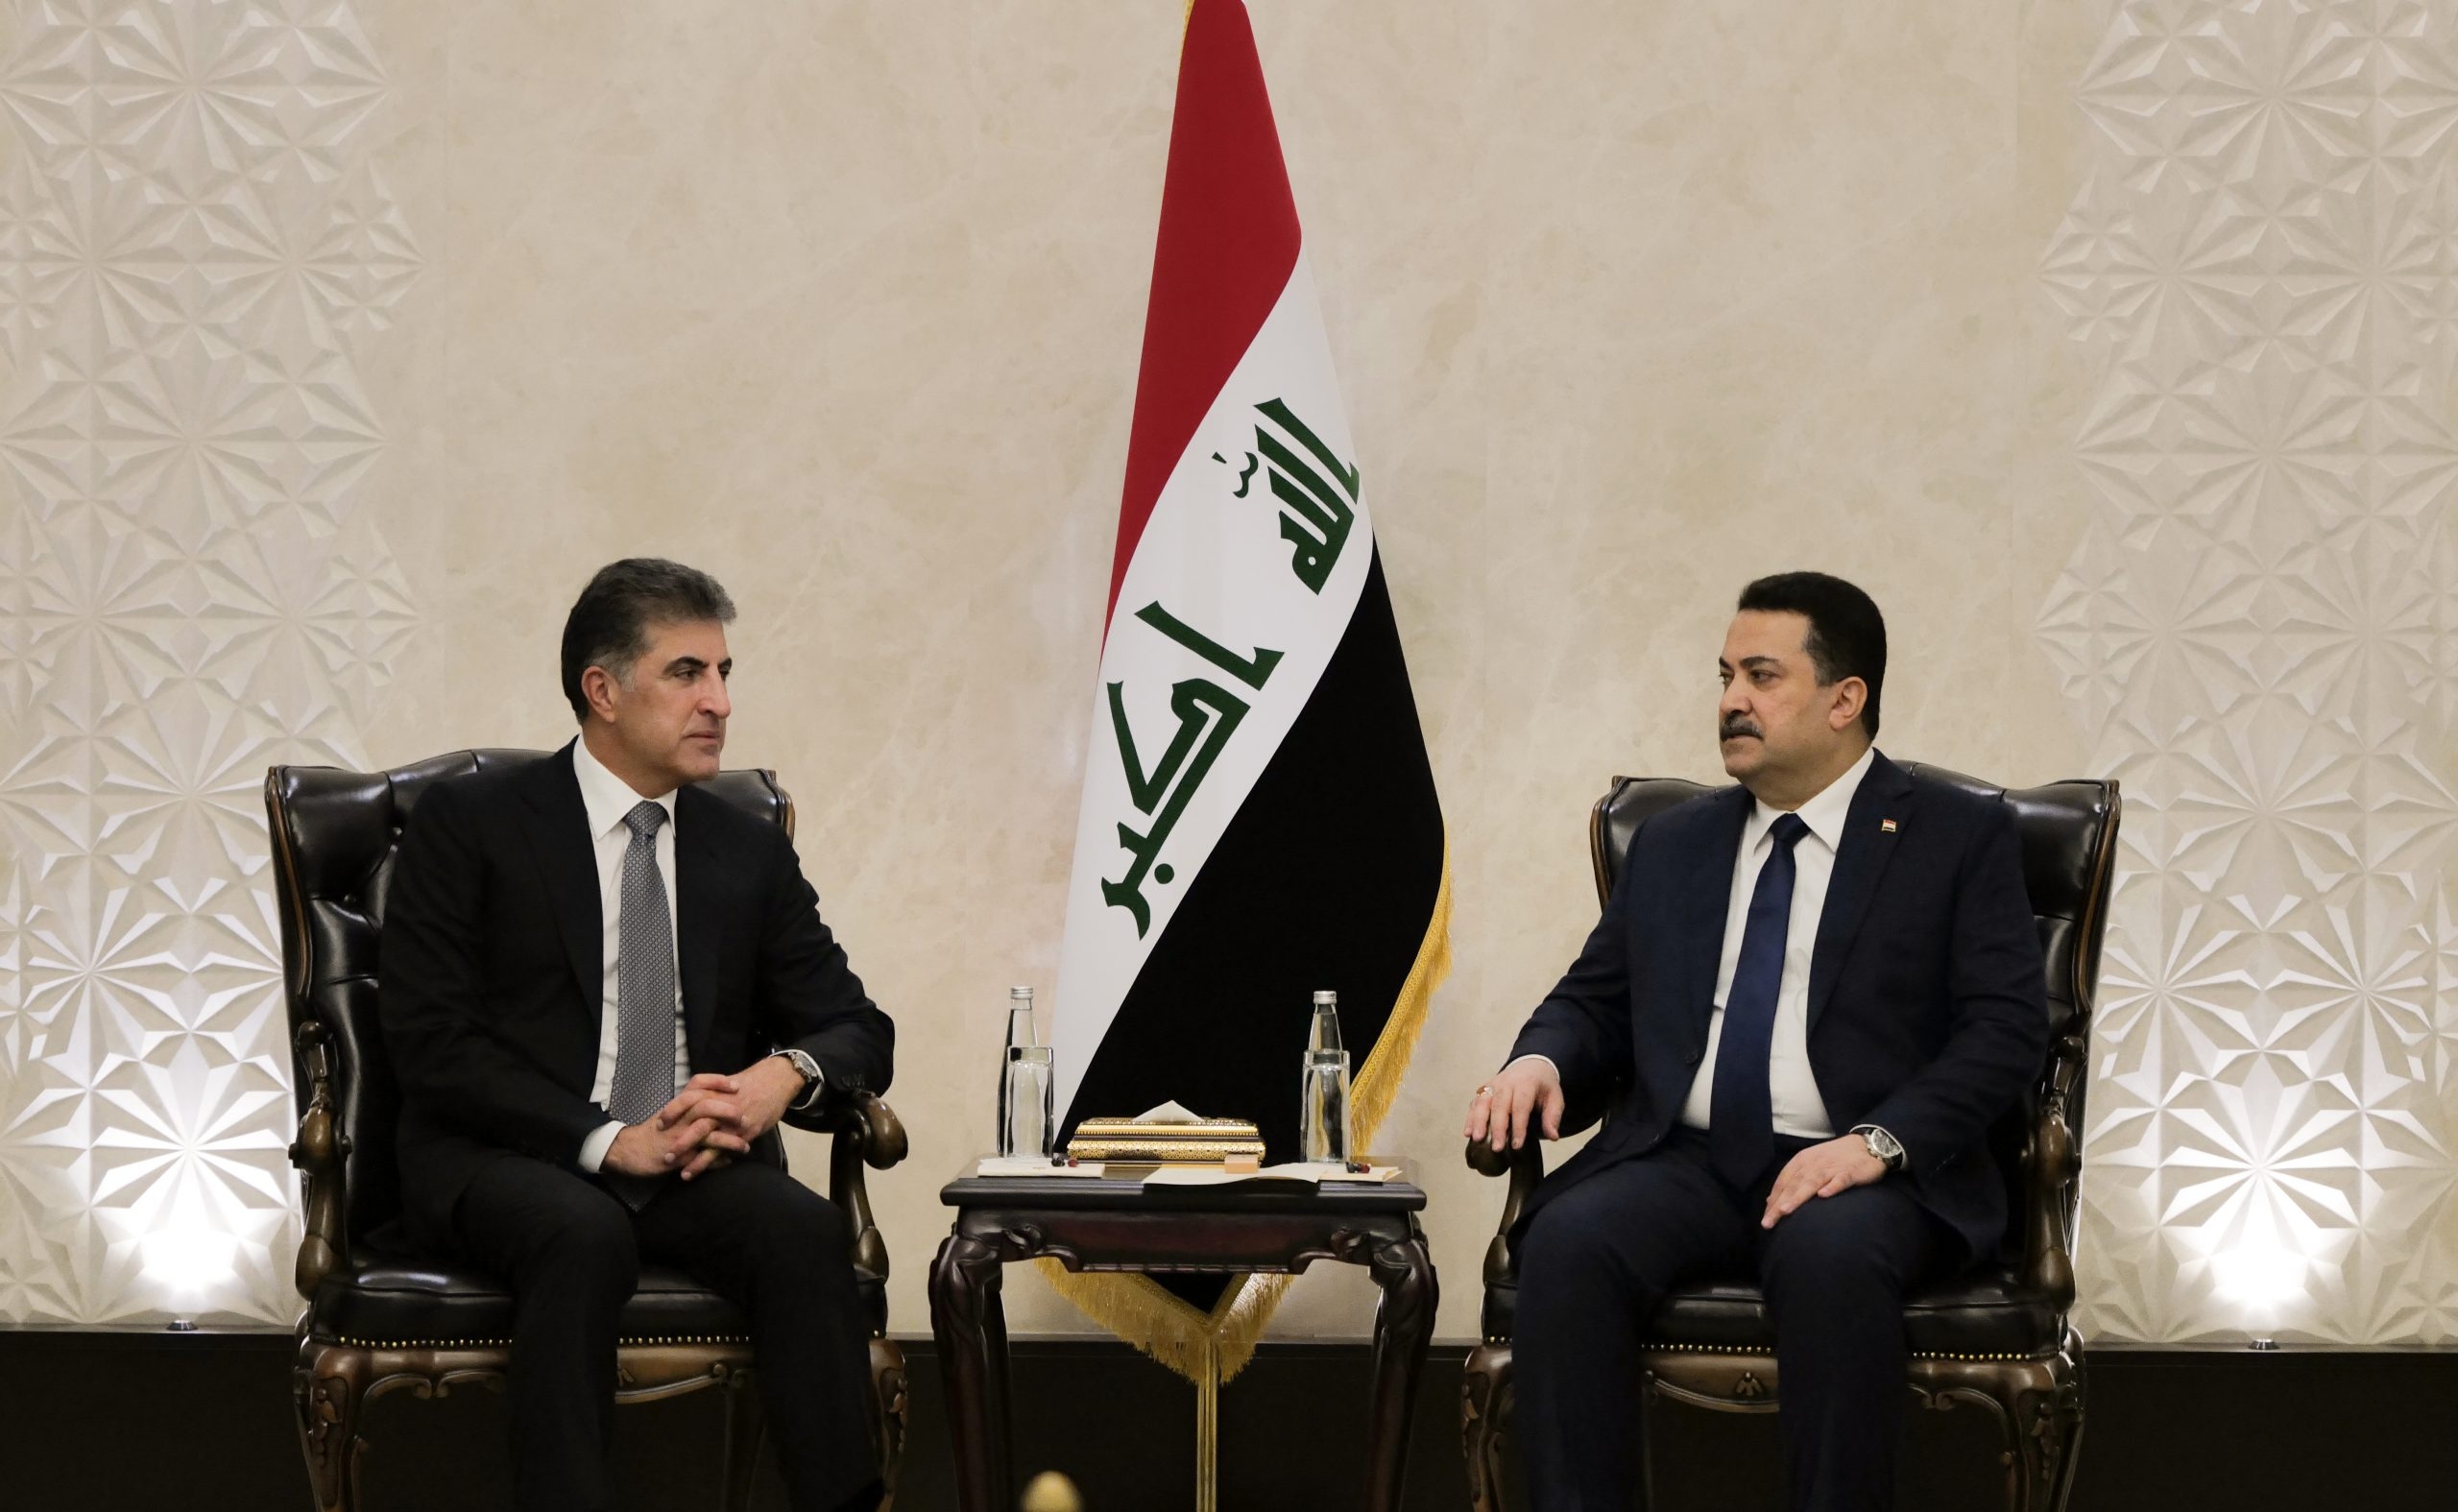 President Nechirvan Barzani and Prime Minister Al-Sudani meet to discuss Erbil-Baghdad relations